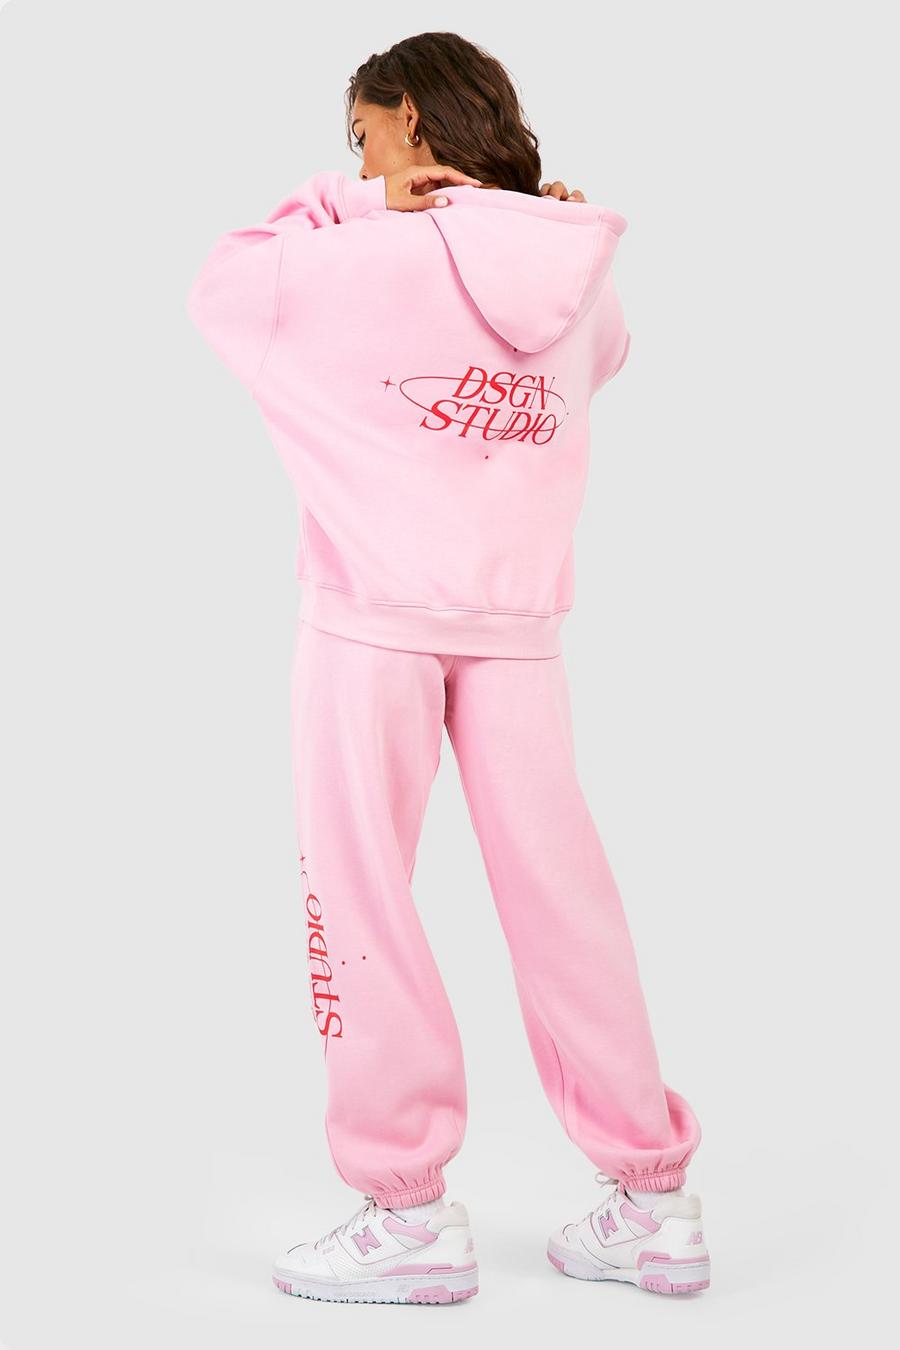 Trainingsanzug mit Kapuze und Dsgn Studio Slogan, Light pink image number 1